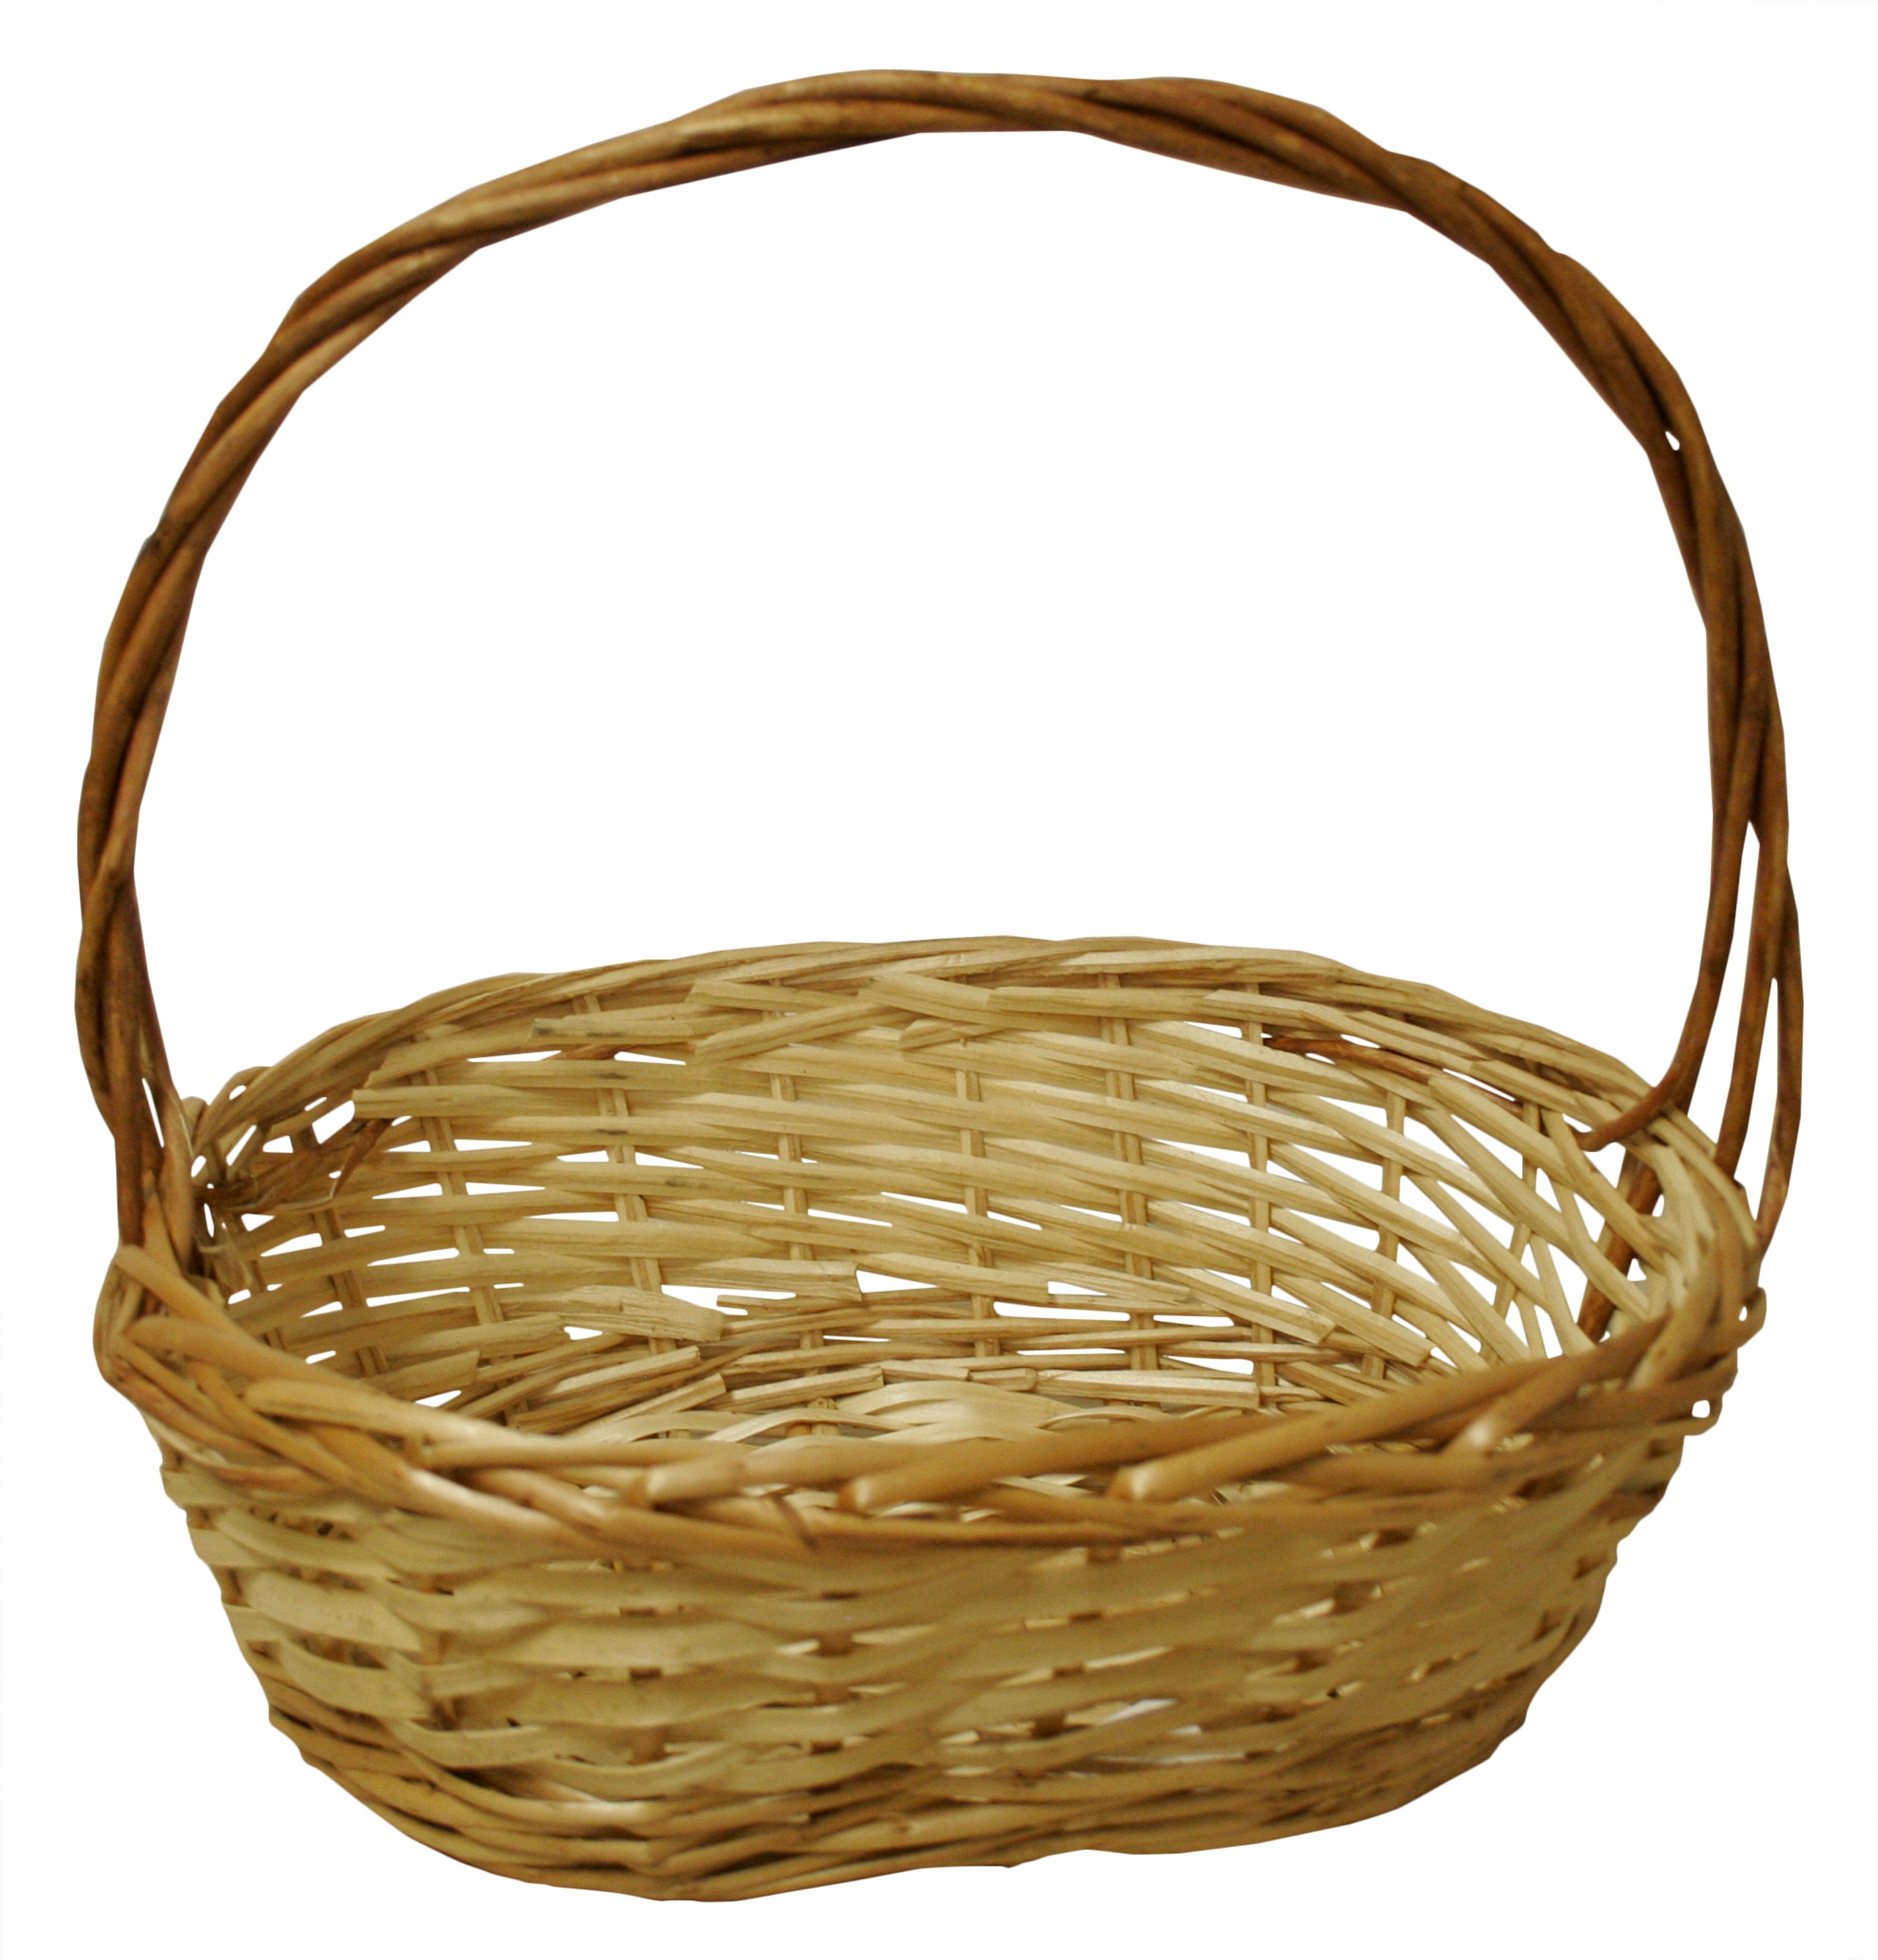 Wicker Basket Gift Baskets Empty Oval Willow Woven Picnic Basket - Jxlgv